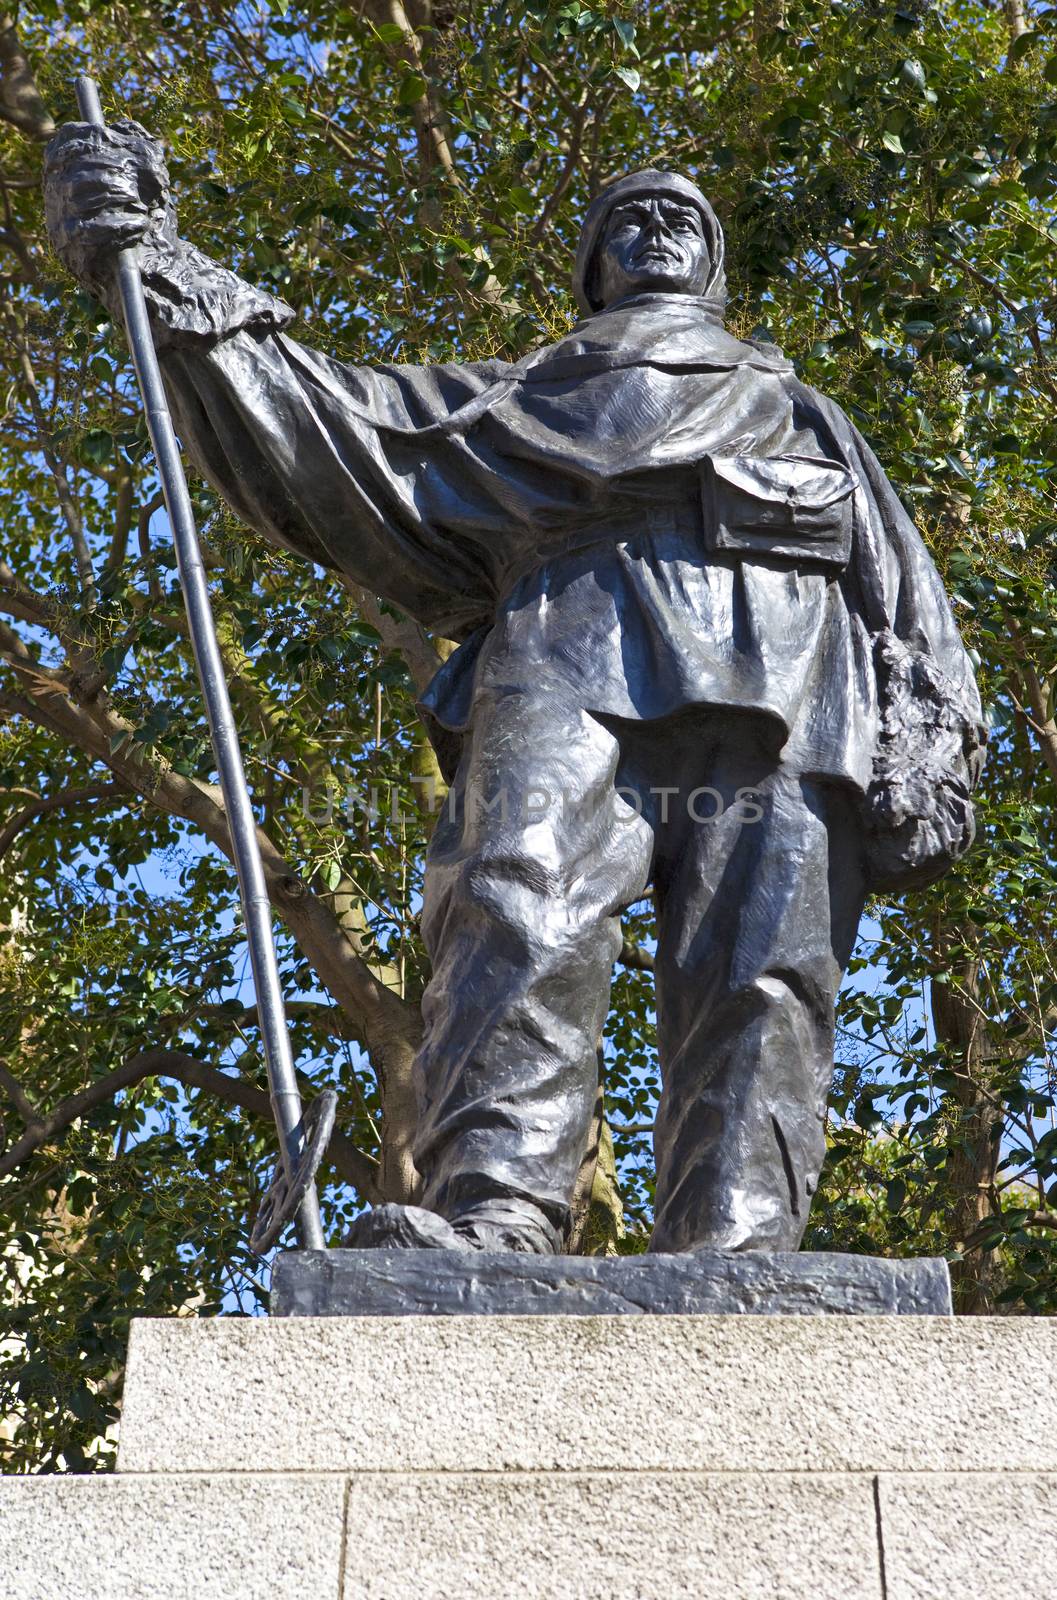 Captain Robert Falcon Scott Statue in London by chrisdorney